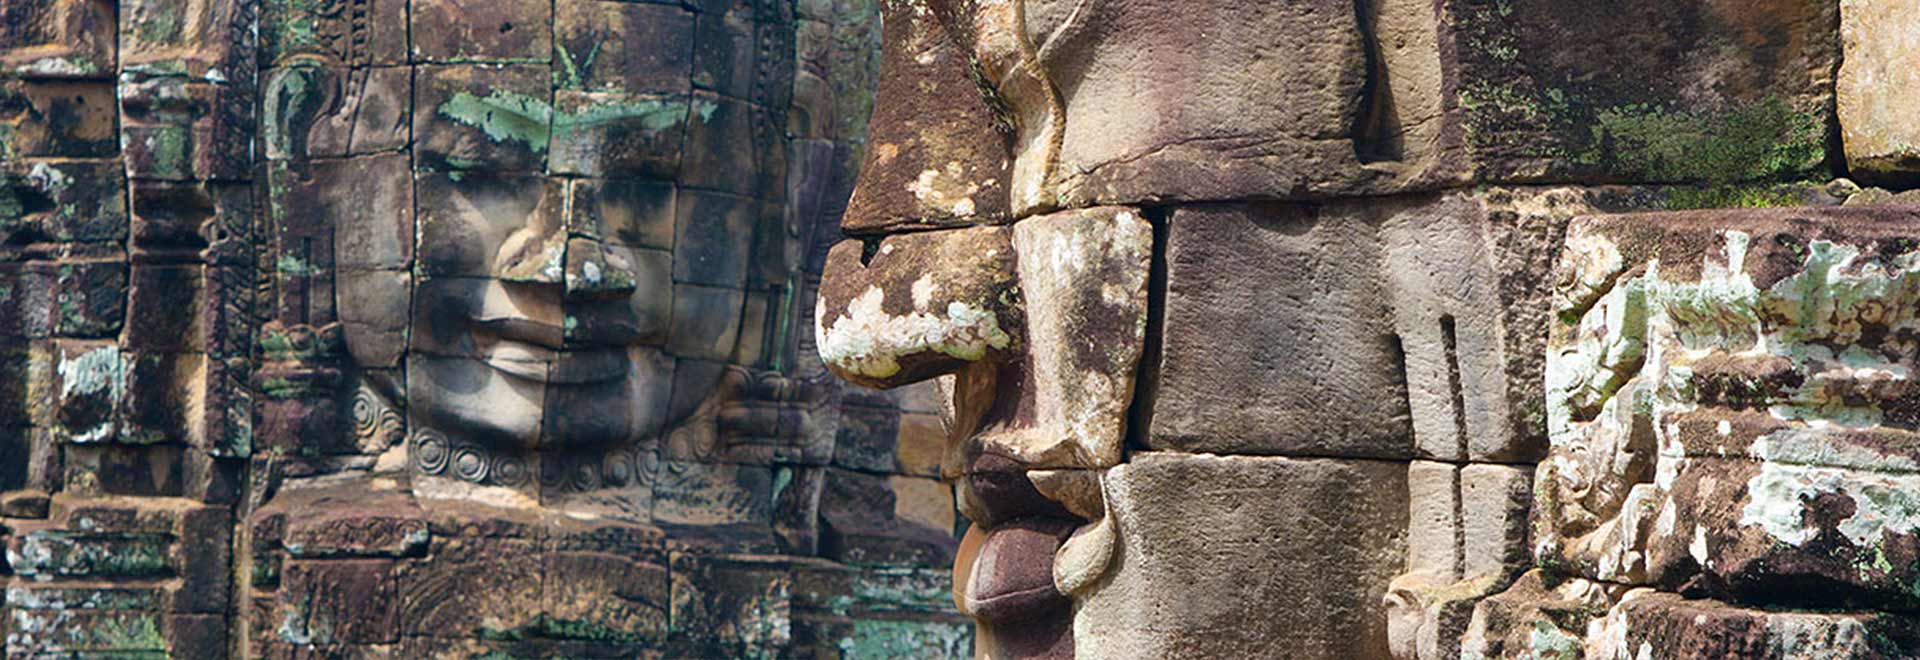 Asia Signature Indochina Angkor Wat Cambodia Stone Faces MH